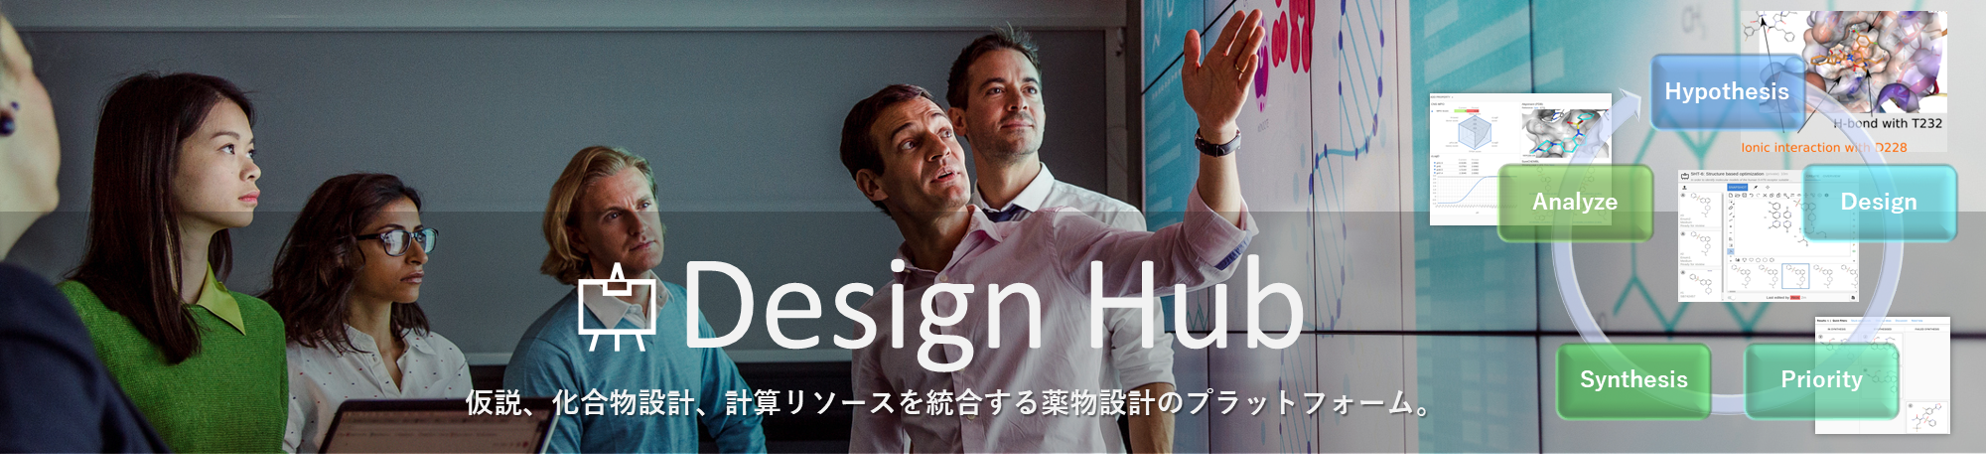 Design-HUB